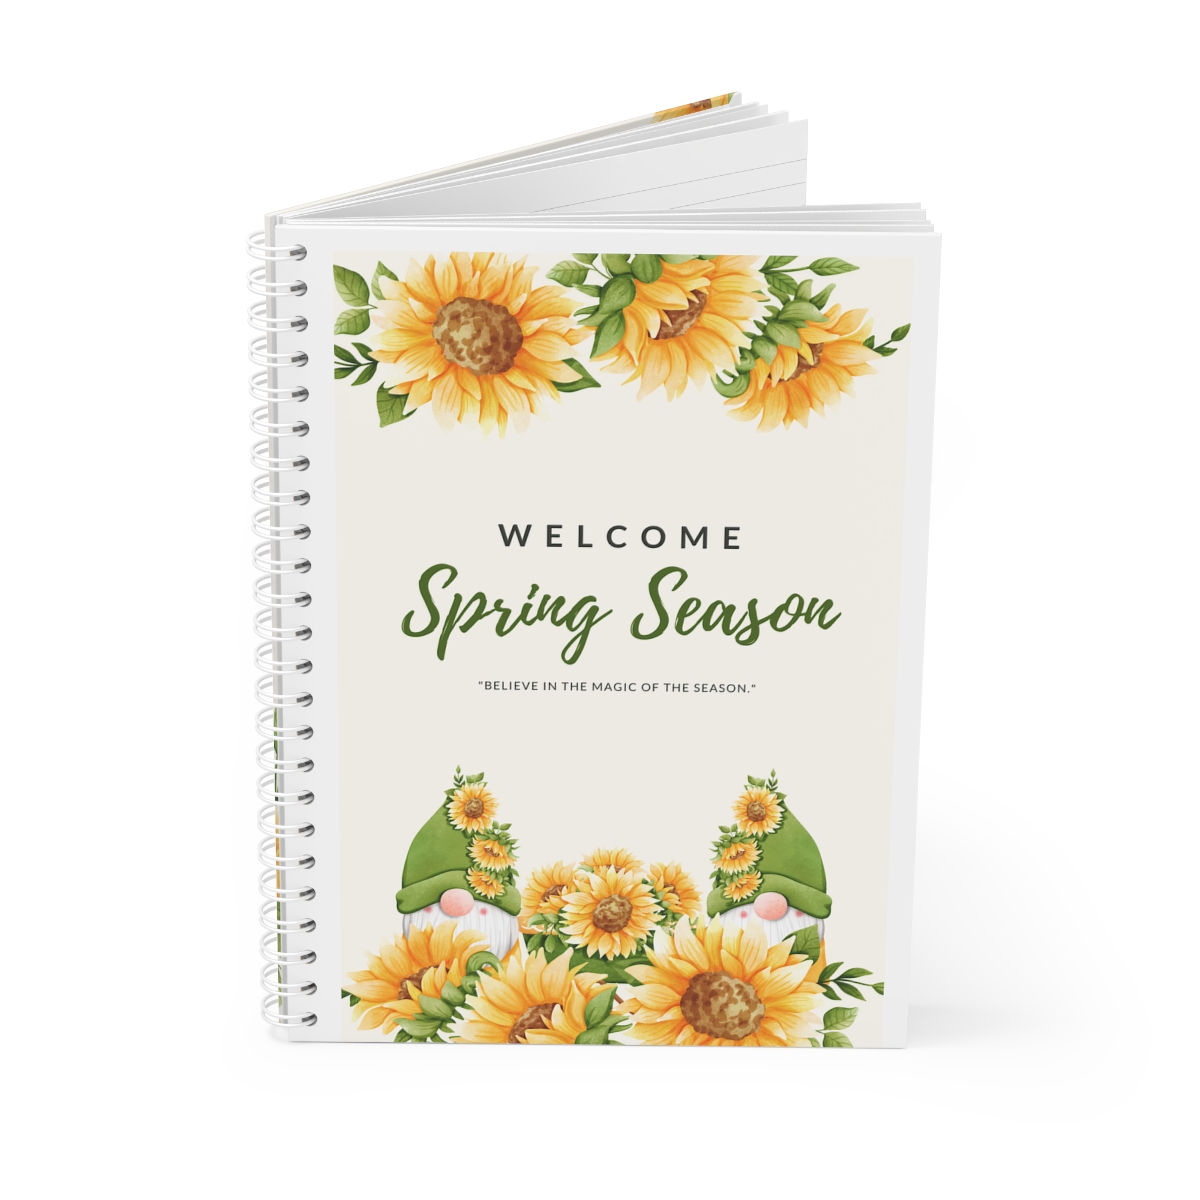 Welcoming Spring season Spiral Notebook product thumbnail image